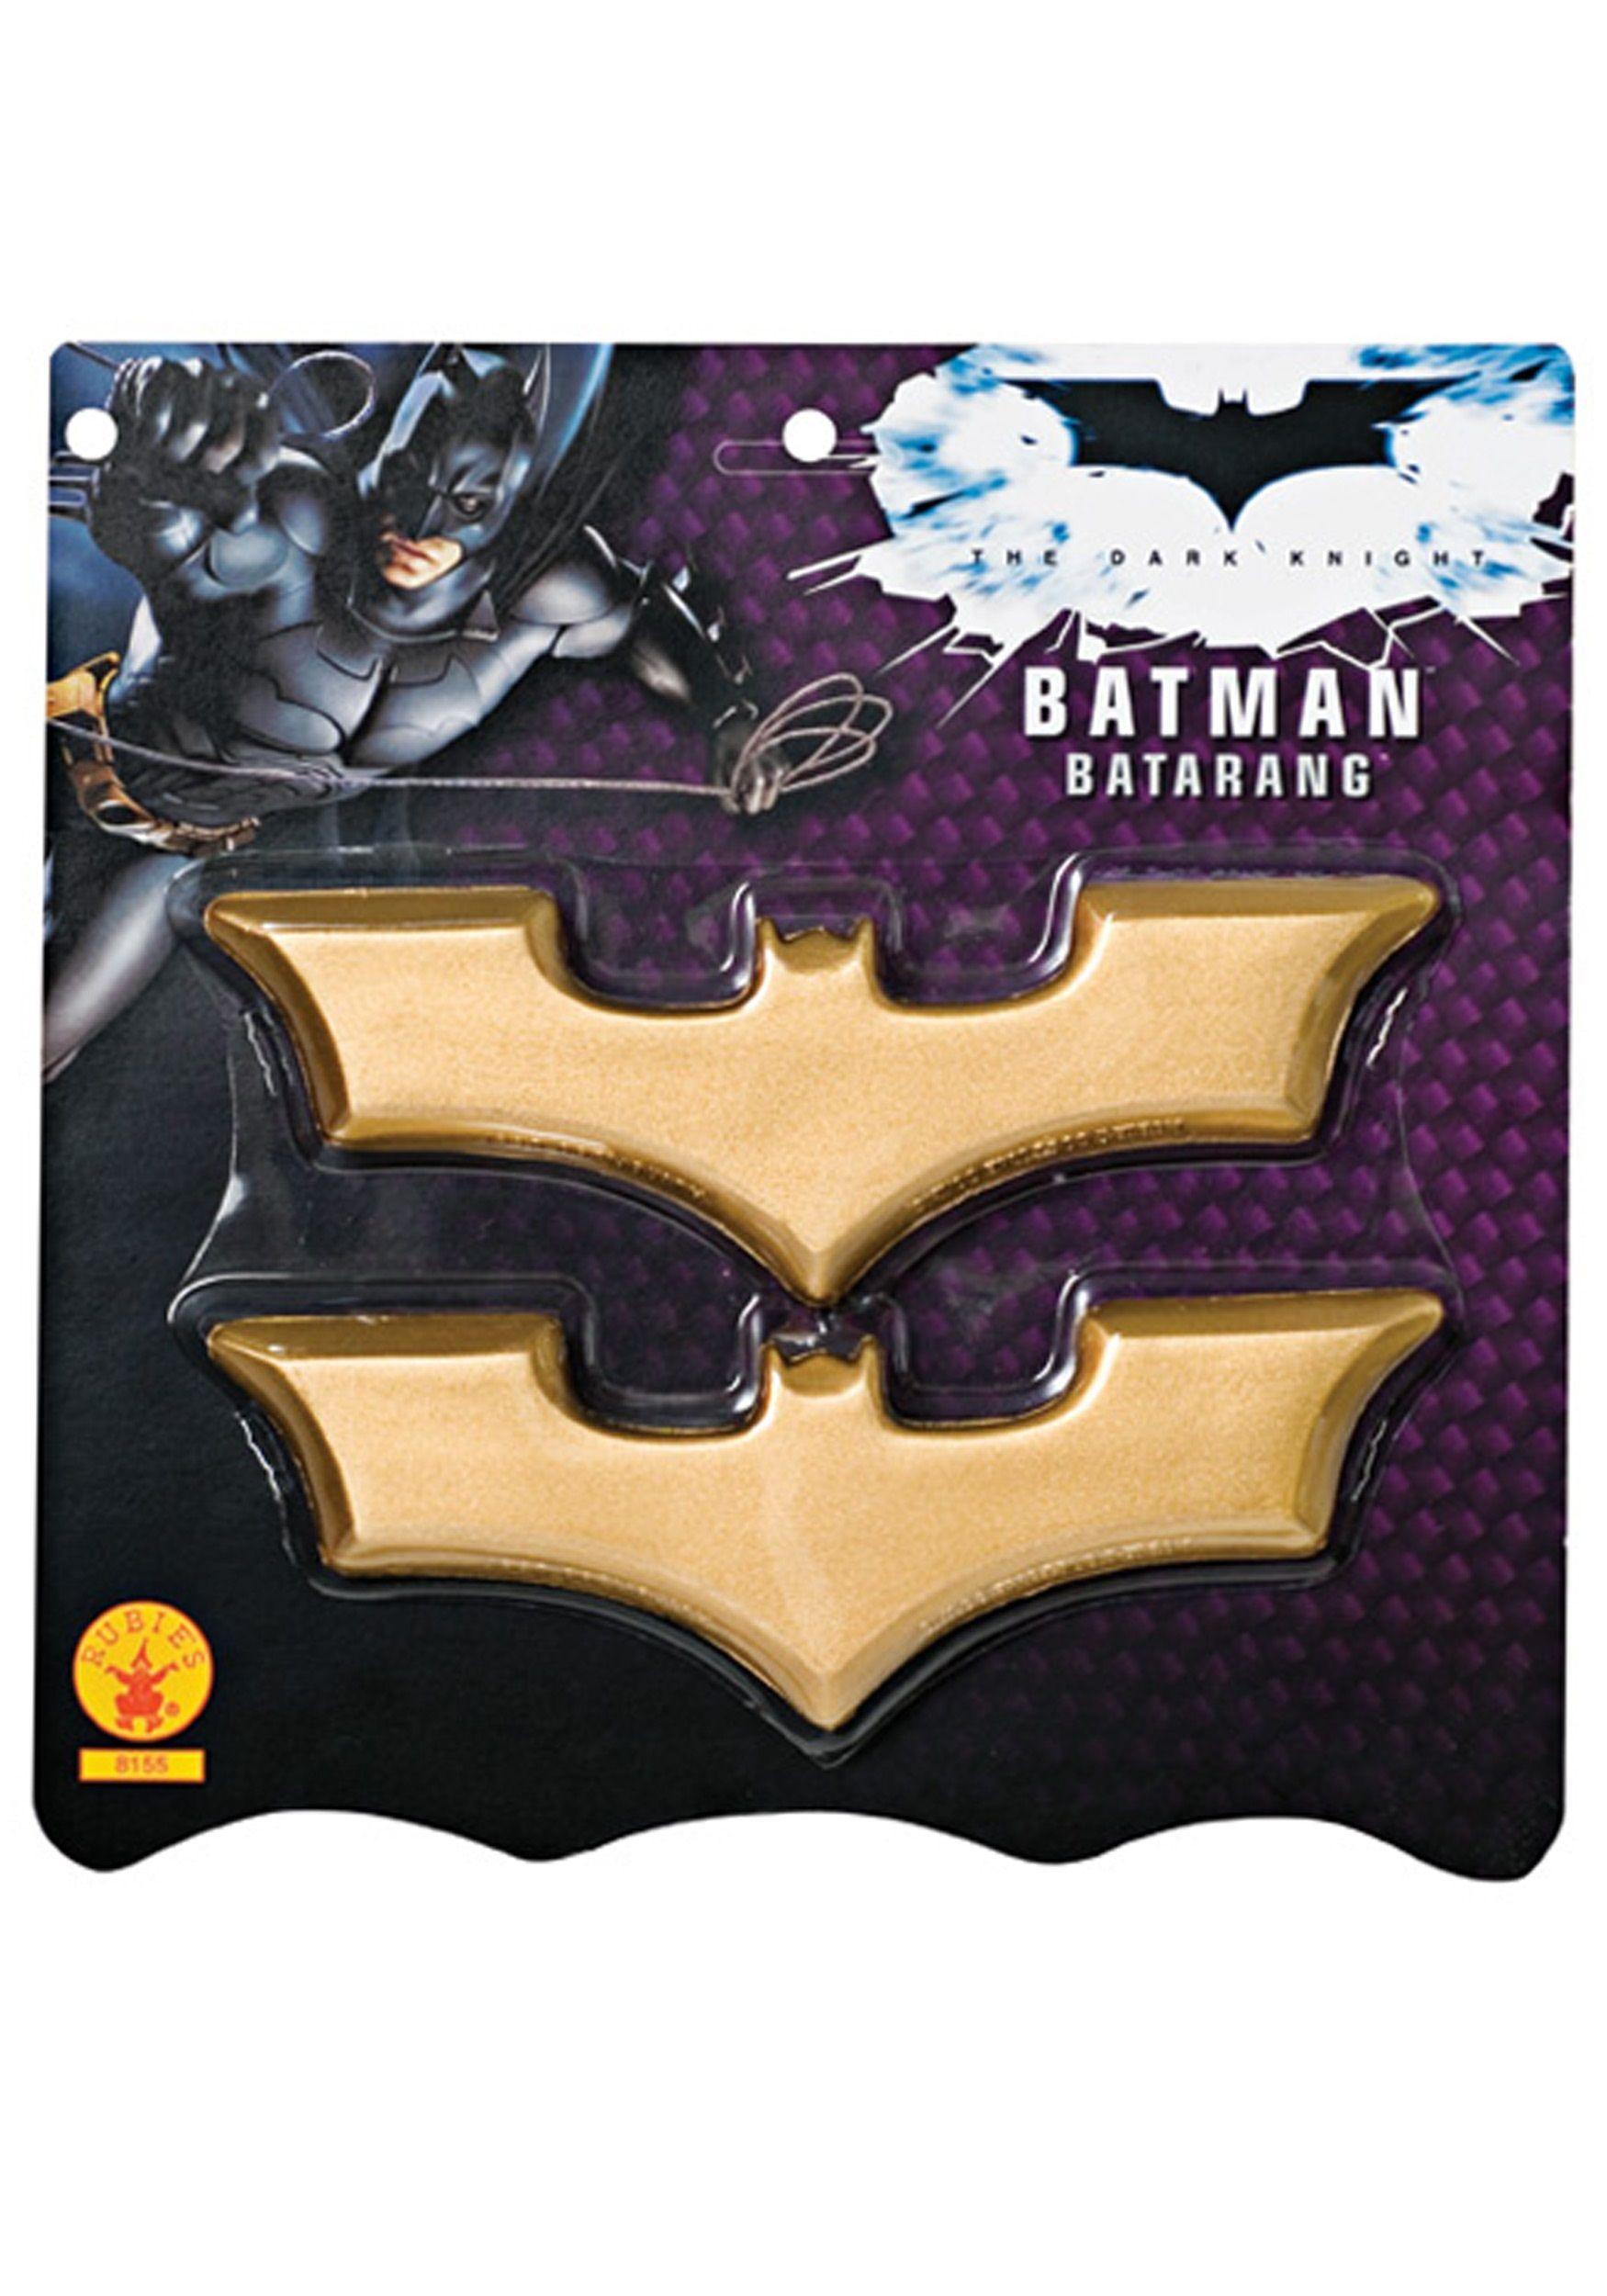 Batman Boomerang Logo - Batman Boomerangs Dark Knight Costume Accessories